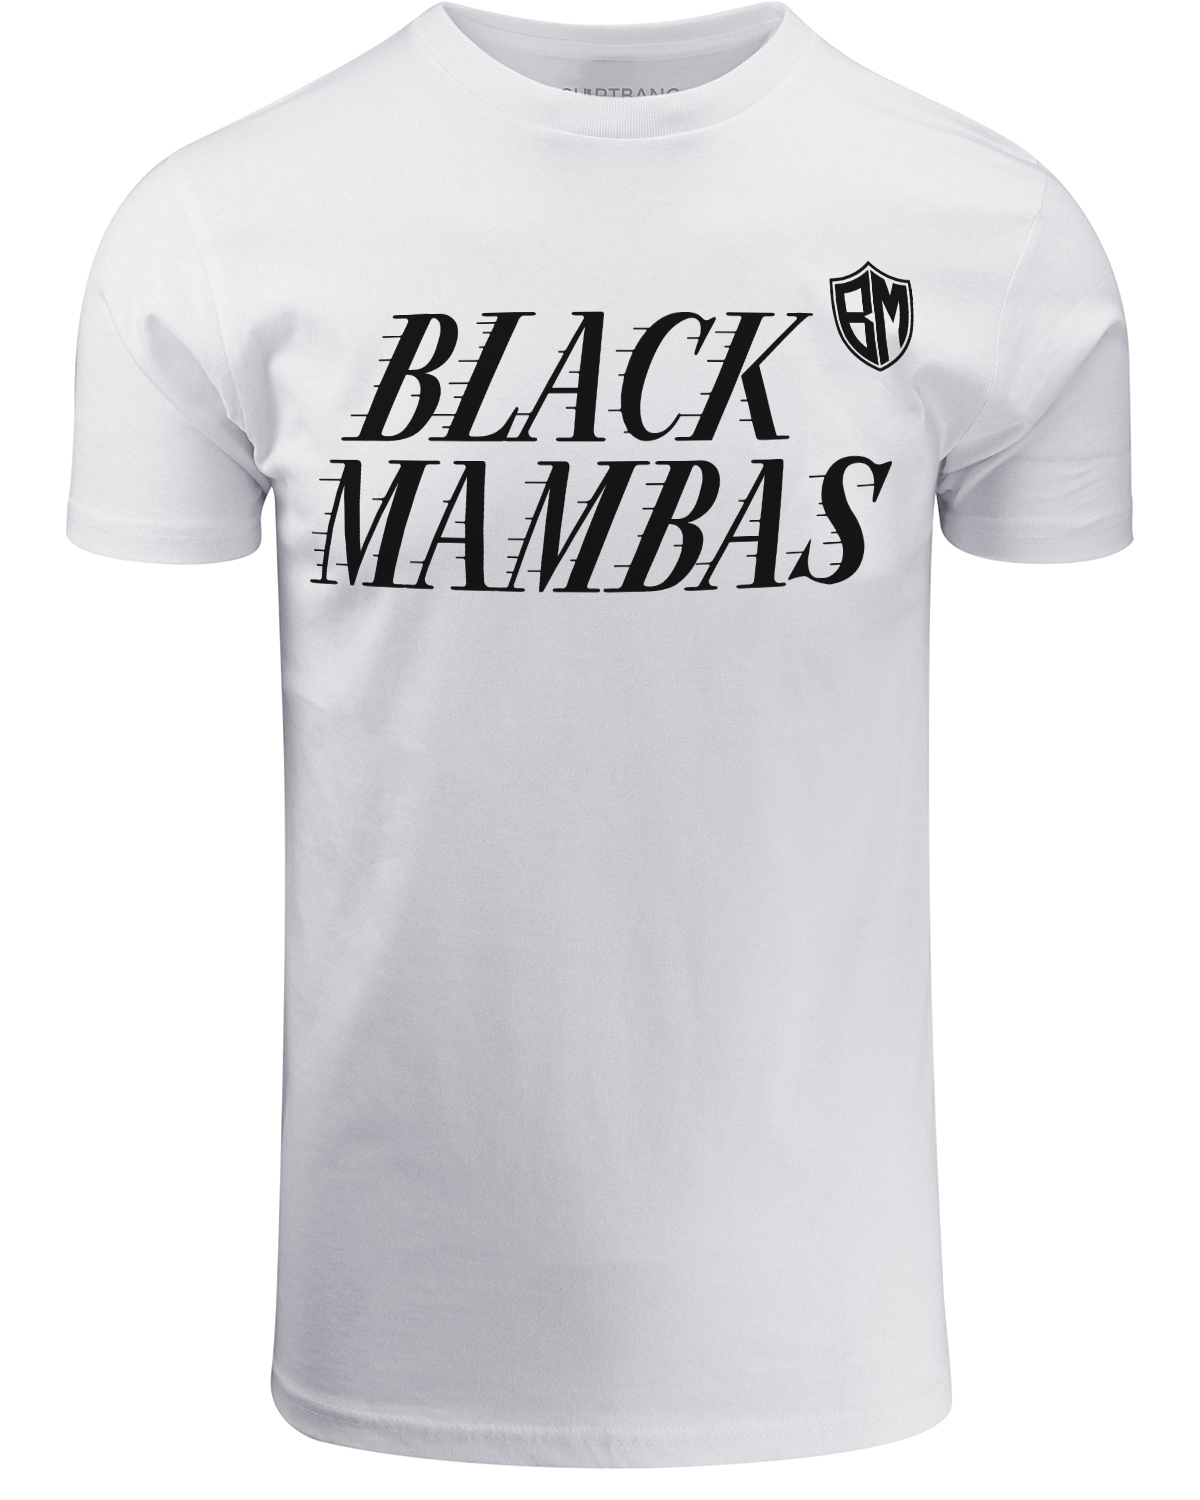 Black Mambas Mens Shirt